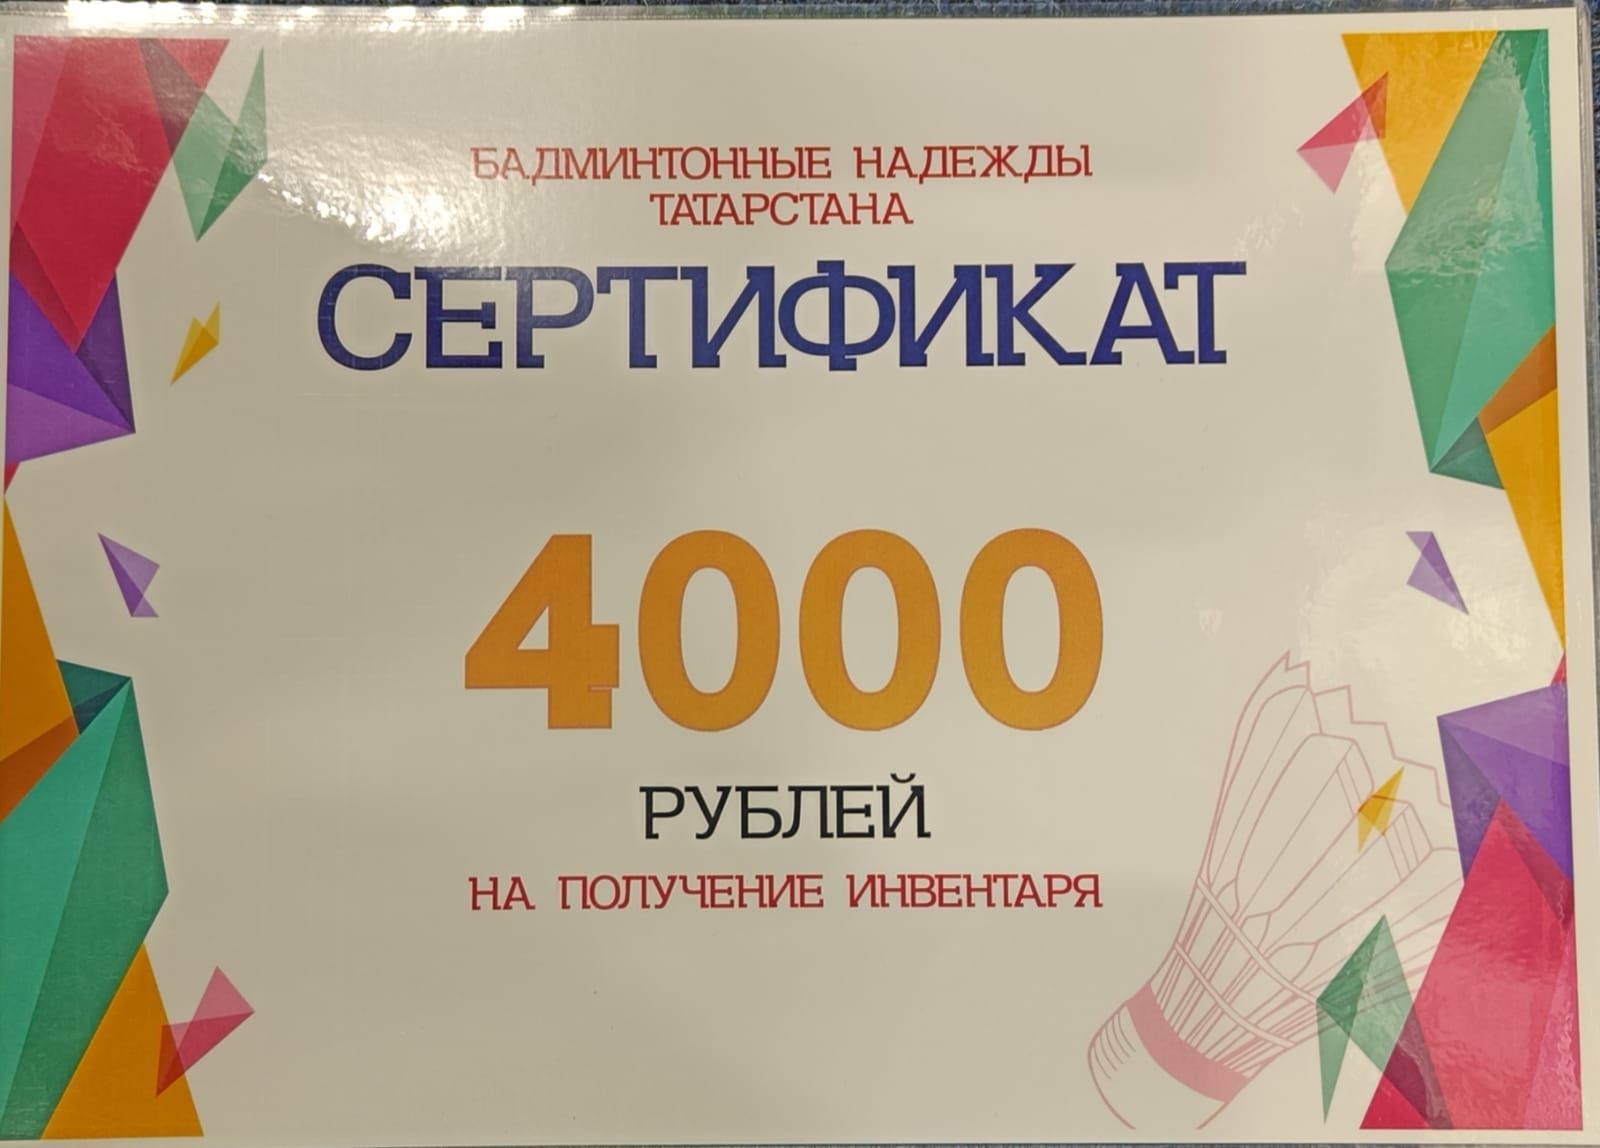 Актаныш бадминтончылары- Татарстанның бадминтон өметләре буларак хөрмәтләнде